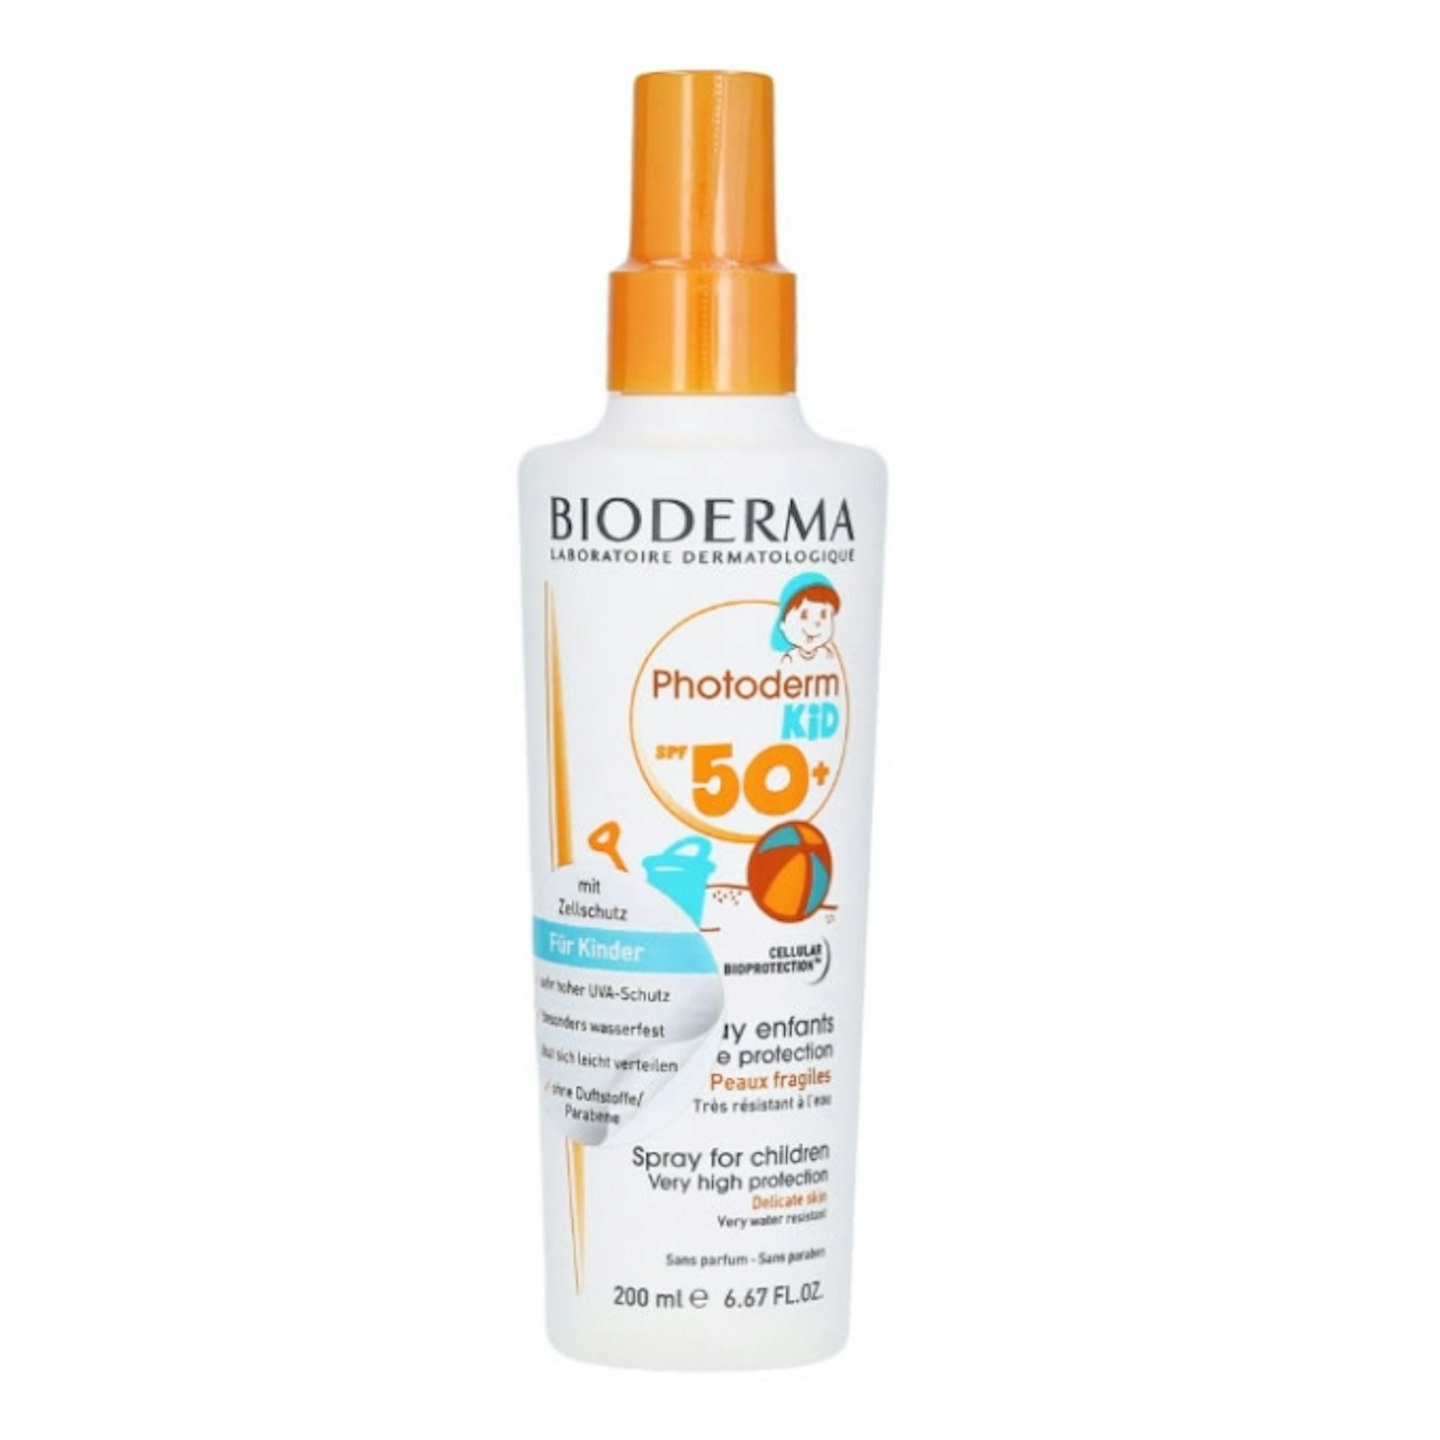 Bioderma Photoderm Kid Very High Protection Spray For Children SPF50+, £18.50